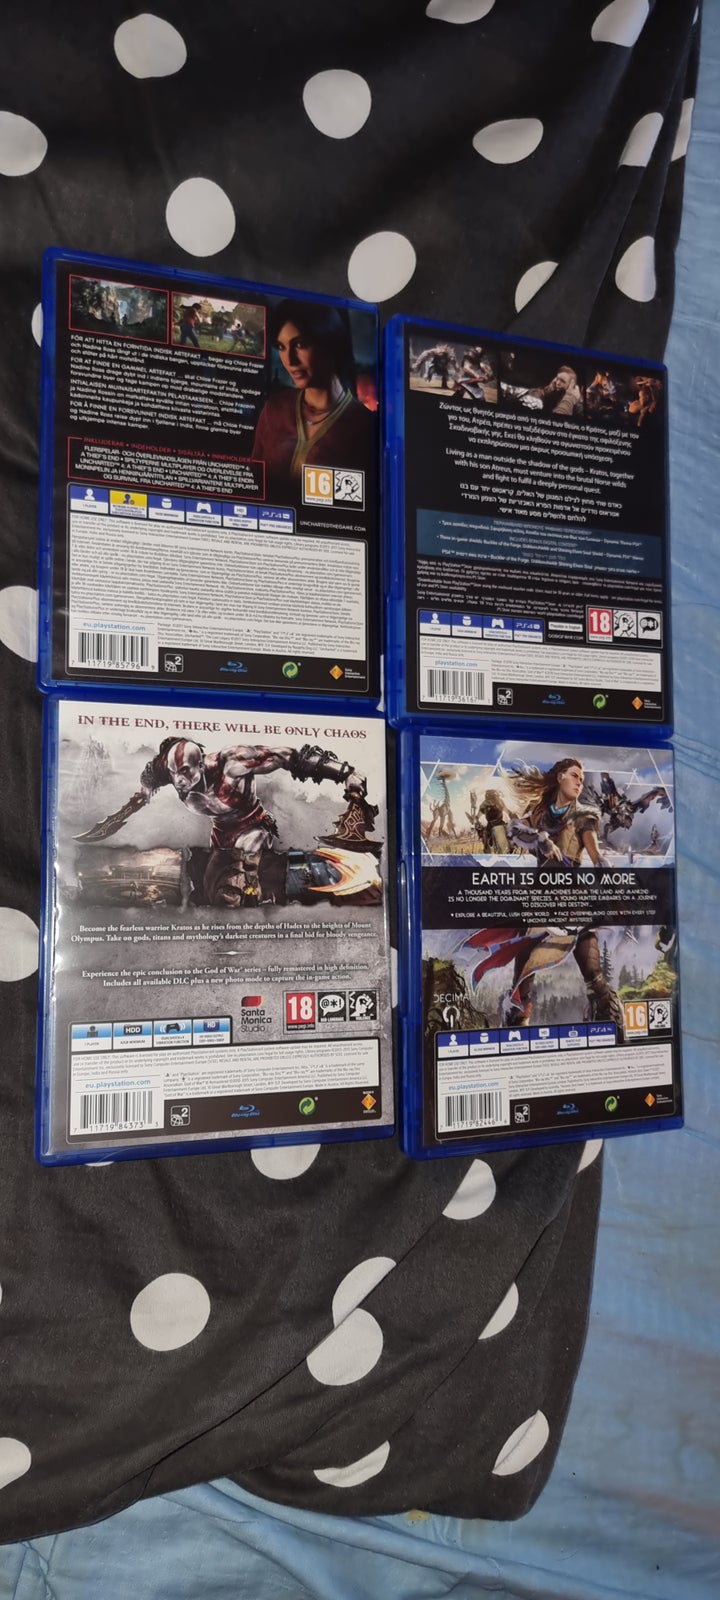 PS4 5 Spil - God of War, Republique, Uncharted